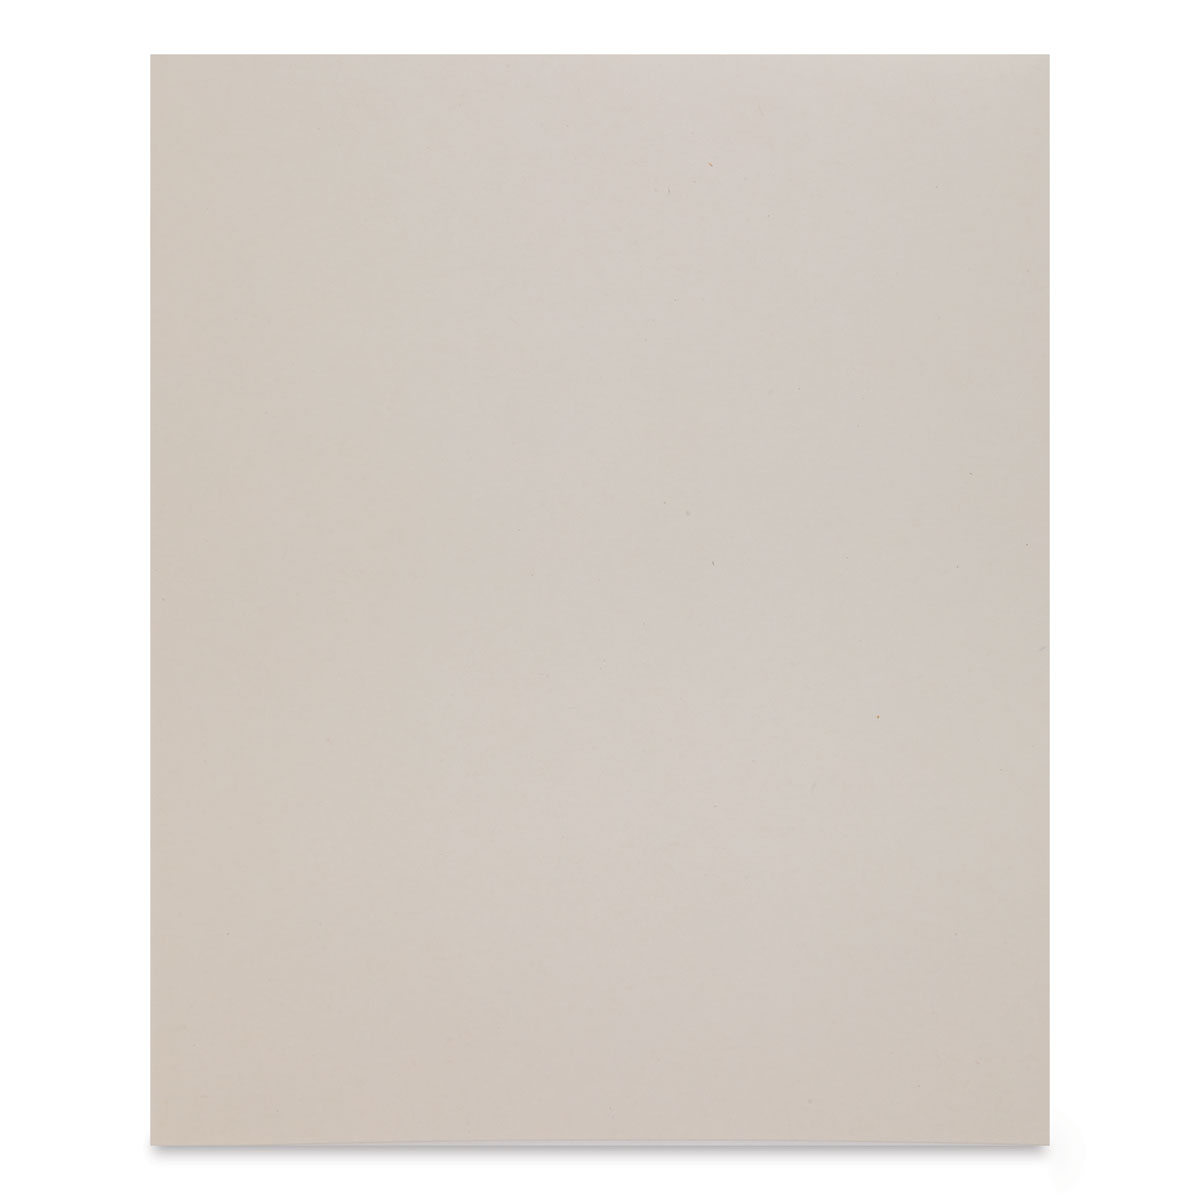 Pastelmat Pad - White, 9-1/2 x 12